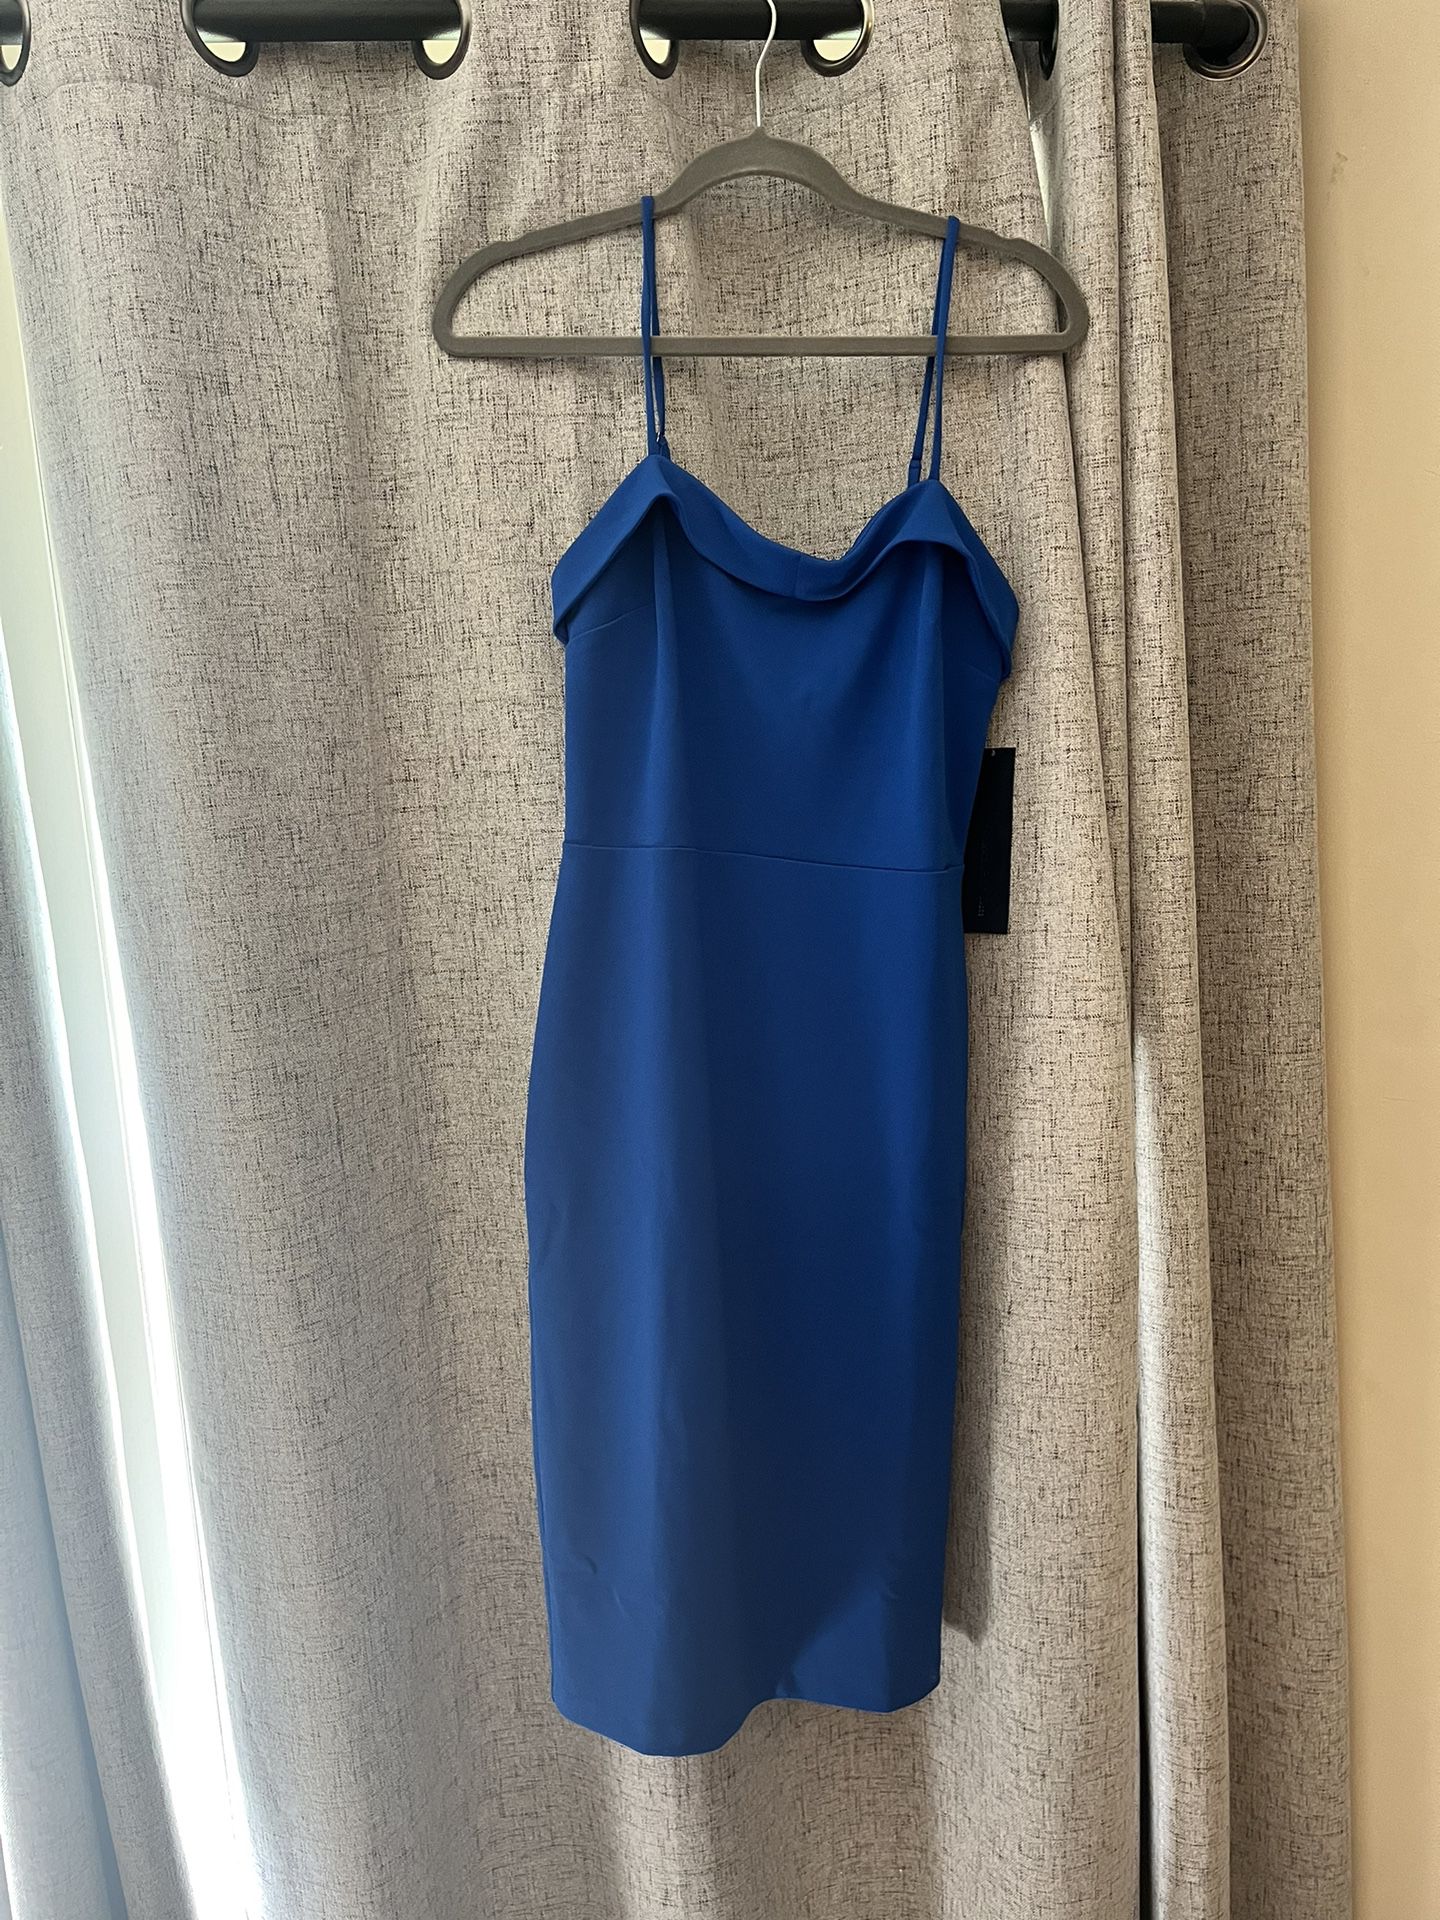 Royal Blue Formal Dress (never worn, Size Medium)